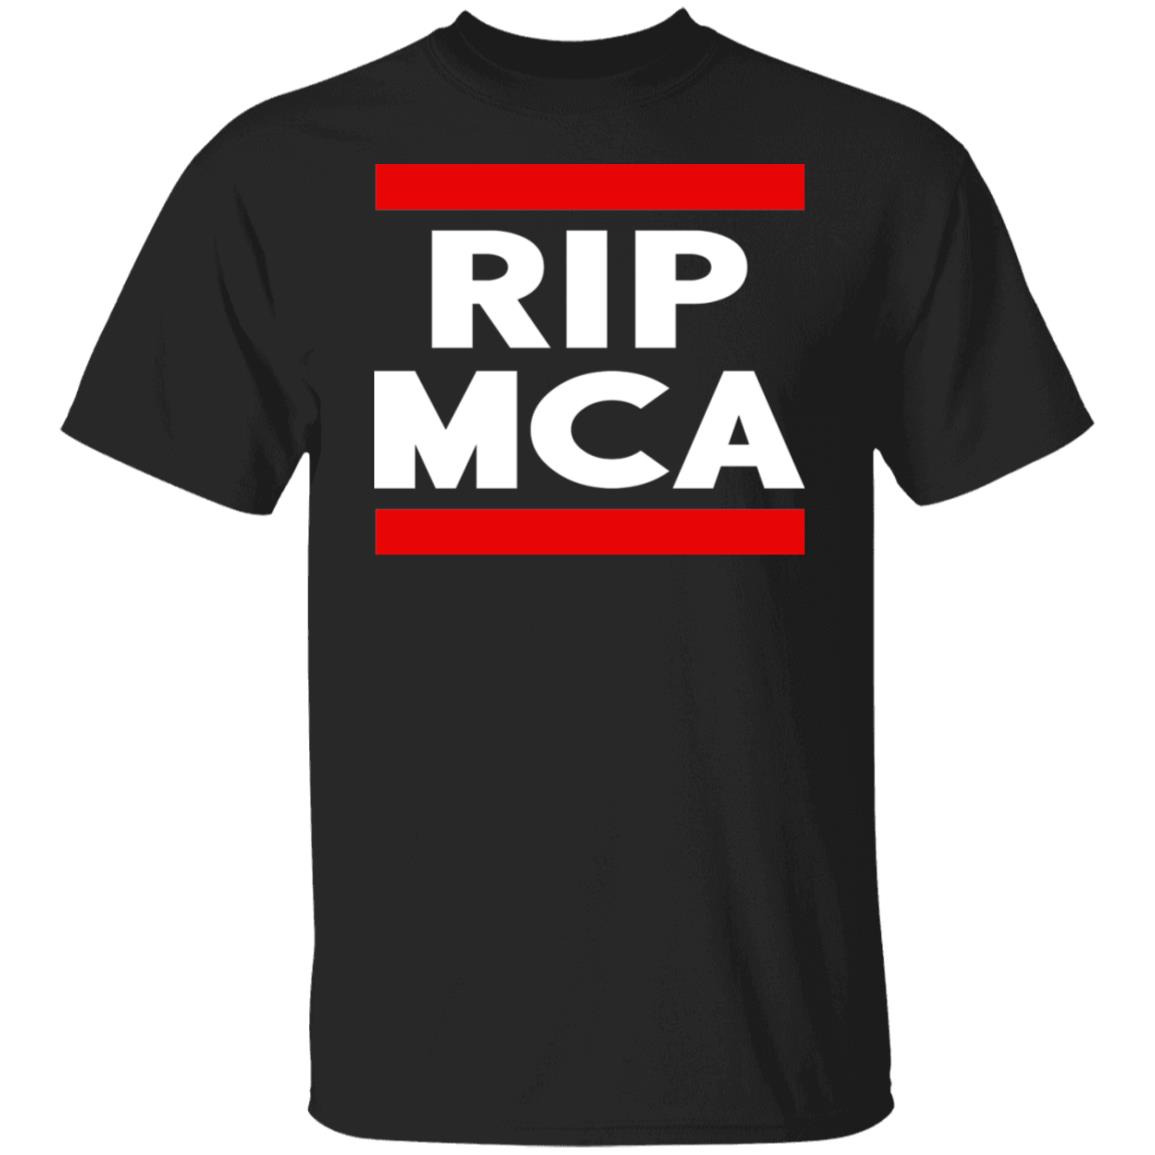 RIP MCA Shirt | Teemoonley.com